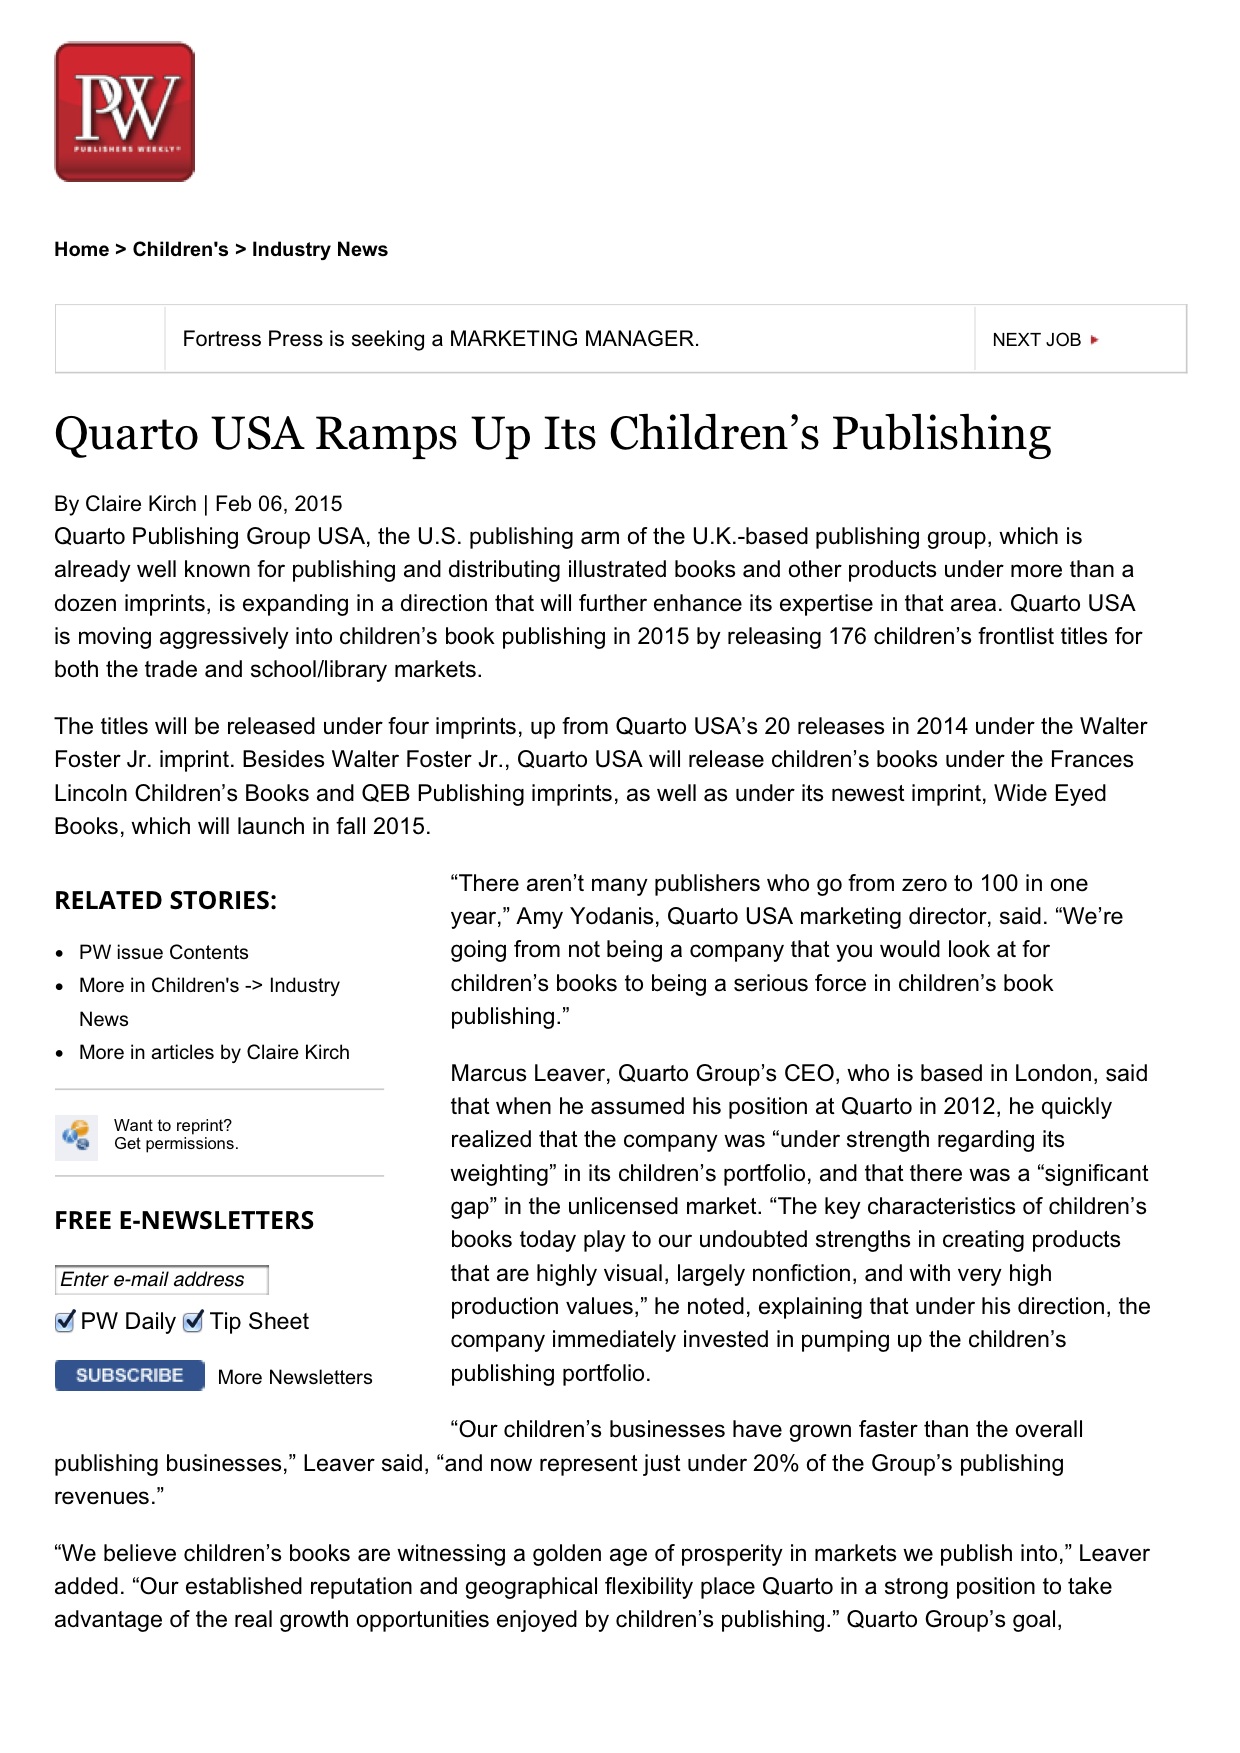 Quarto USA Ramps Up Its Children’s Publishing.jpg